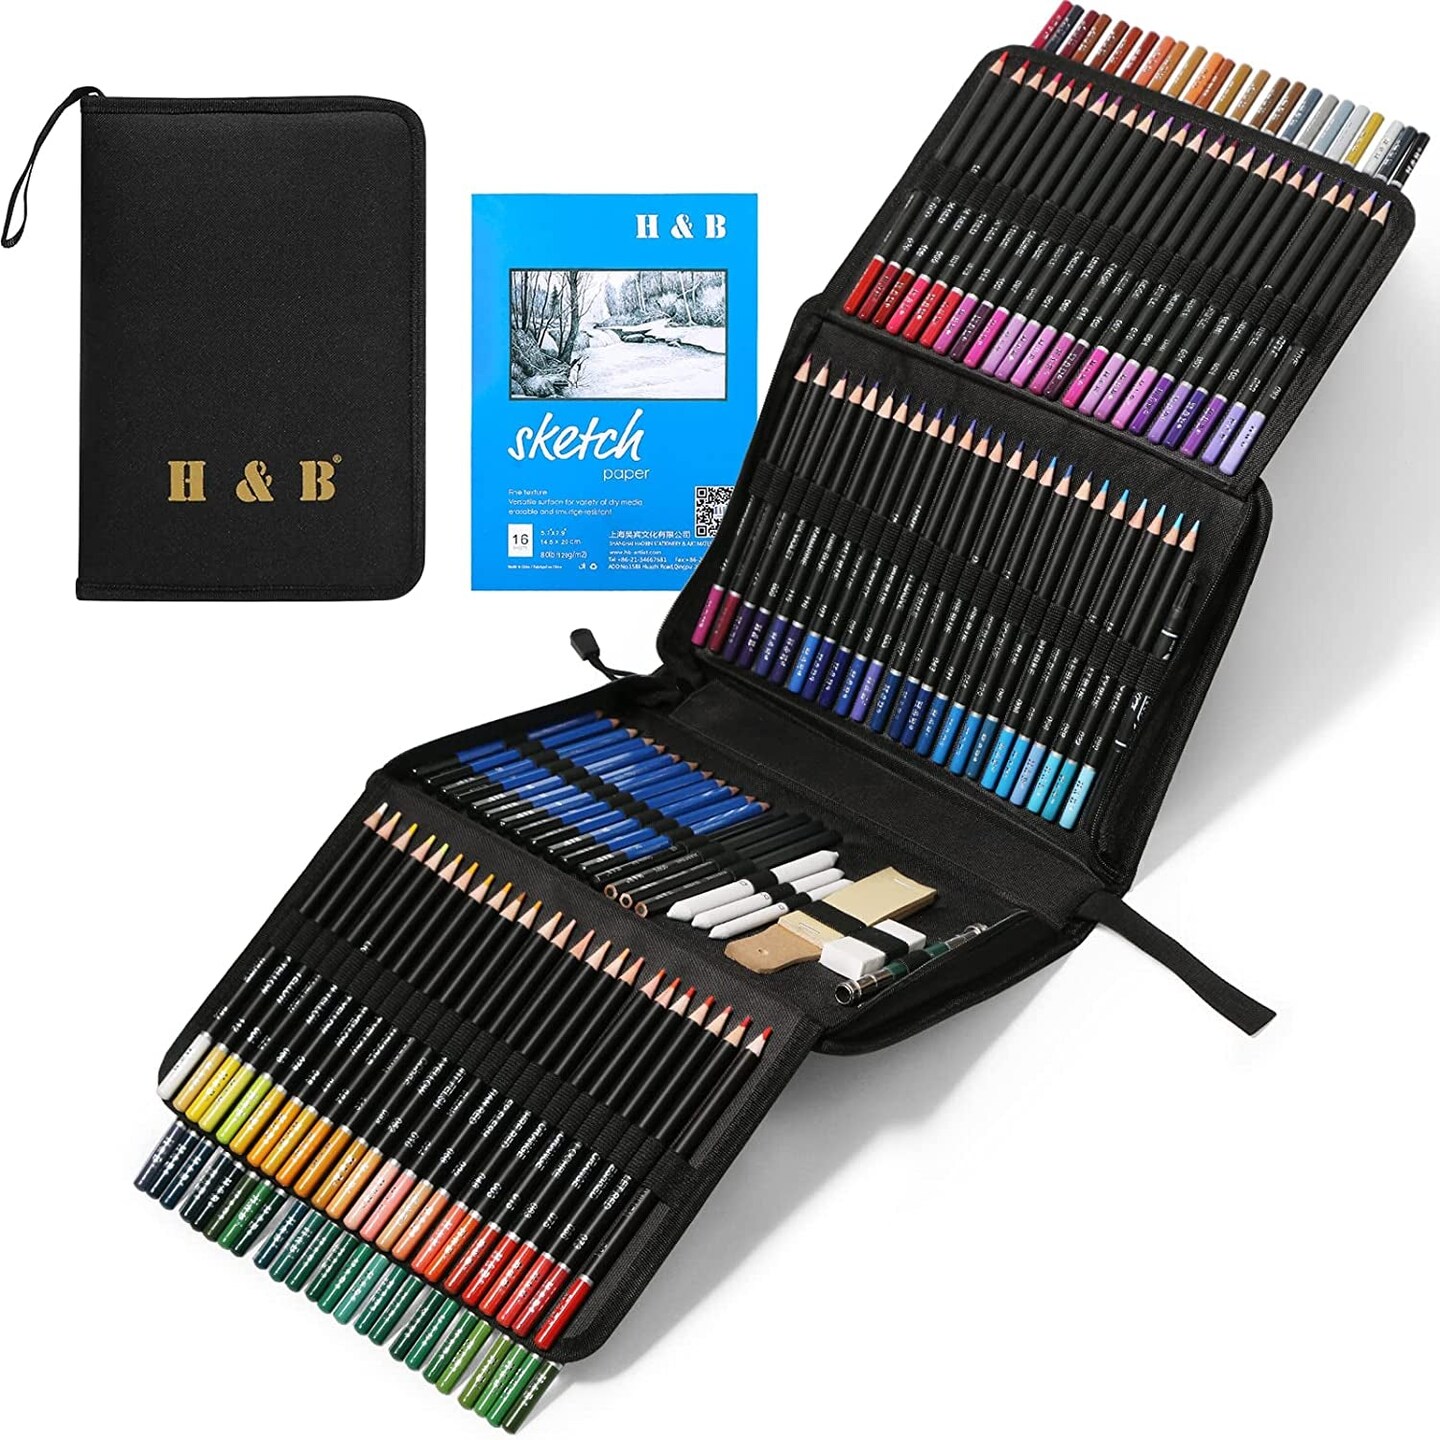 33pcs Drawing Sketching Pencil Set Artist Kit Includes Sketch Pad Graphite  Pencils Charcoal Stick Eraser Professional